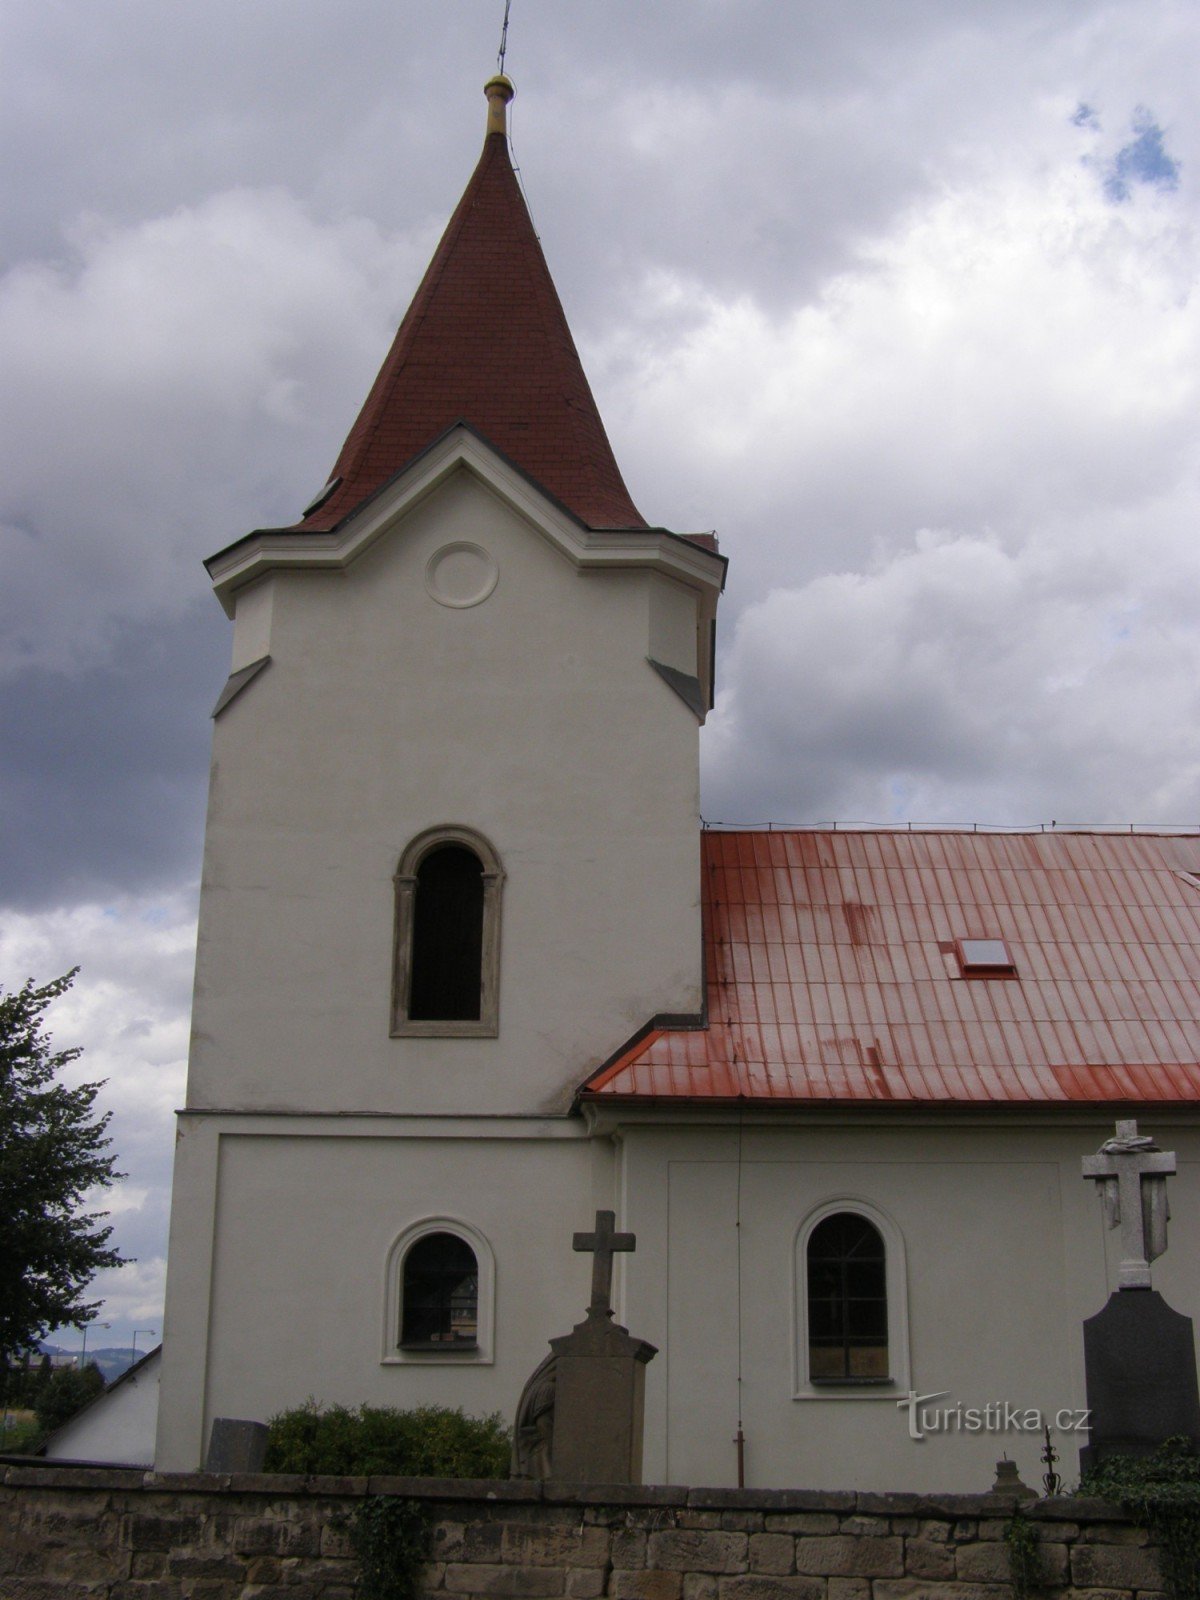 Orașul vechi - Biserica Sf. Francisc